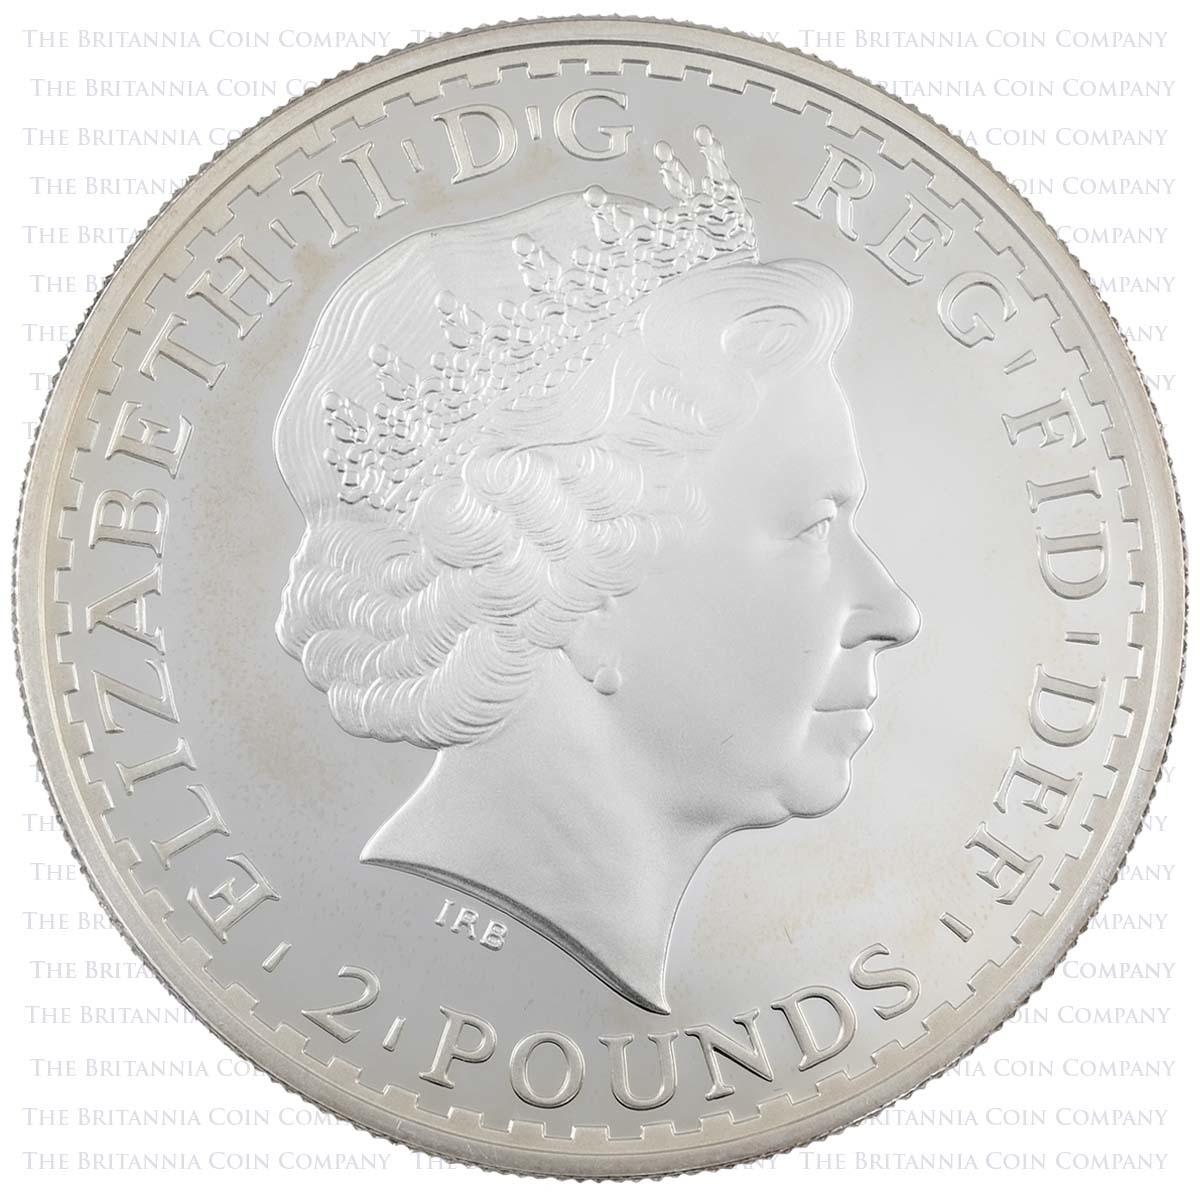 2010 Britannia Four Coin Silver Proof Set 1oz Obverse